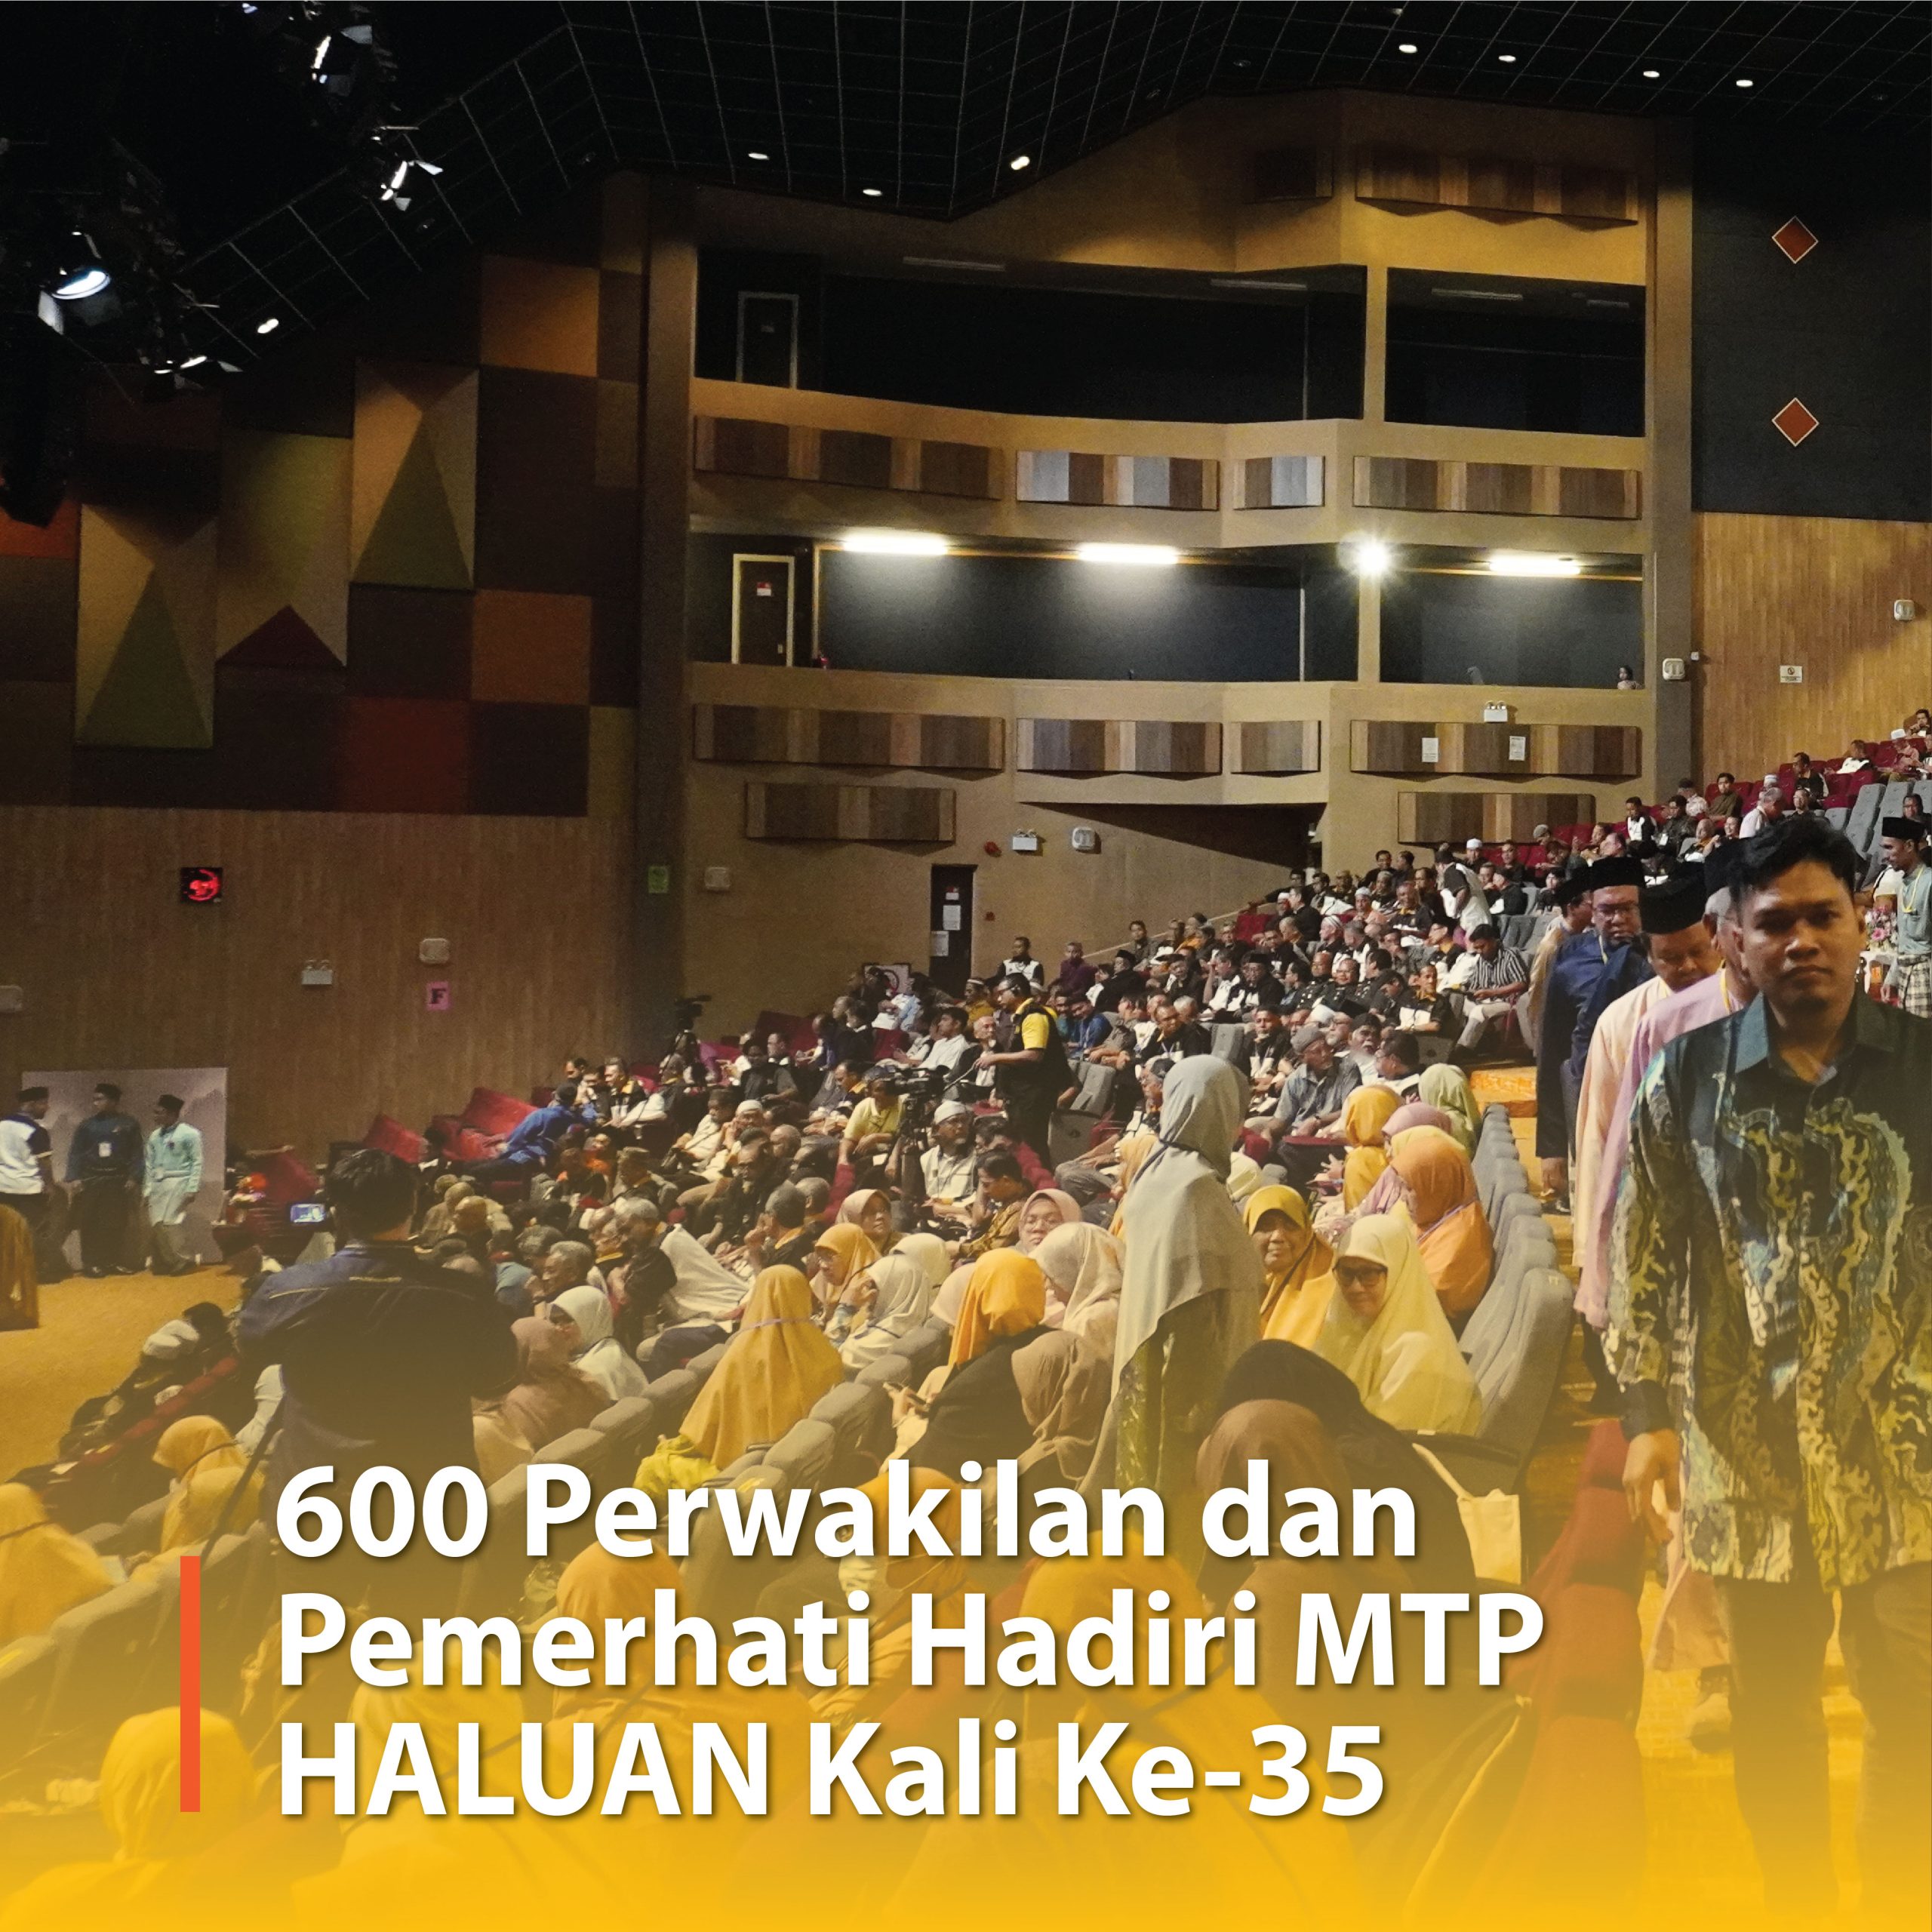 600 Perwakilan dan Pemerhati Hadiri Mesyuarat Tahunan Perwakilan HALUAN Kali Ke-35